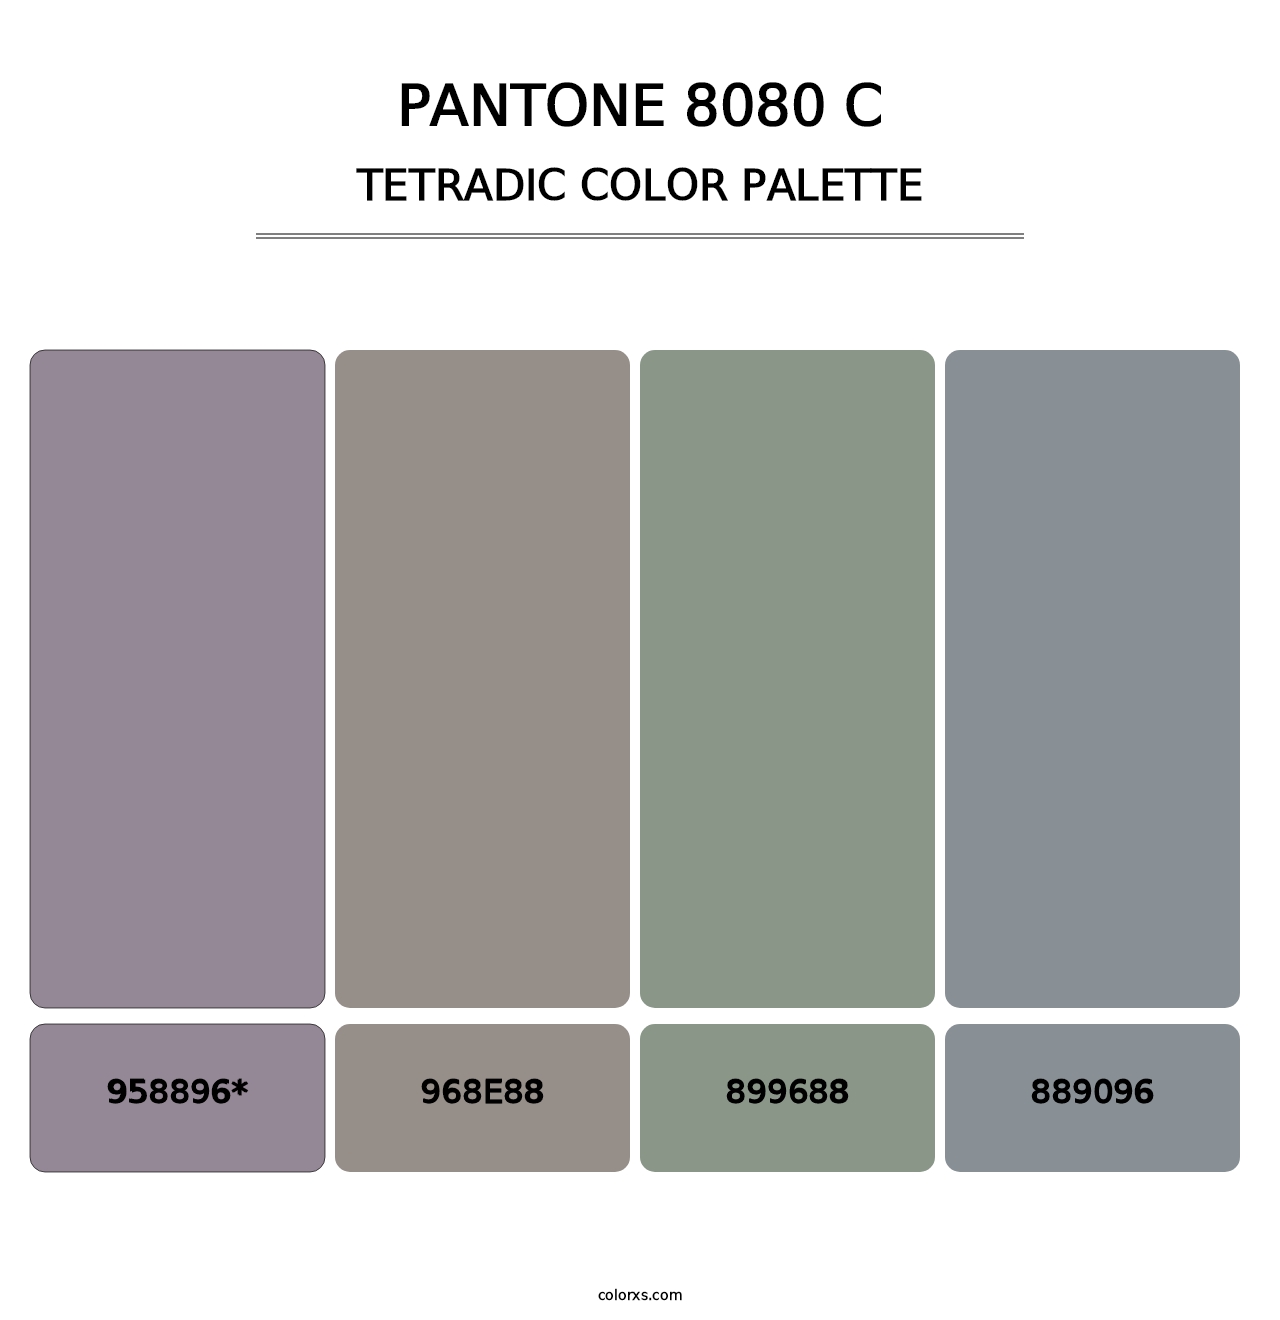 PANTONE 8080 C - Tetradic Color Palette